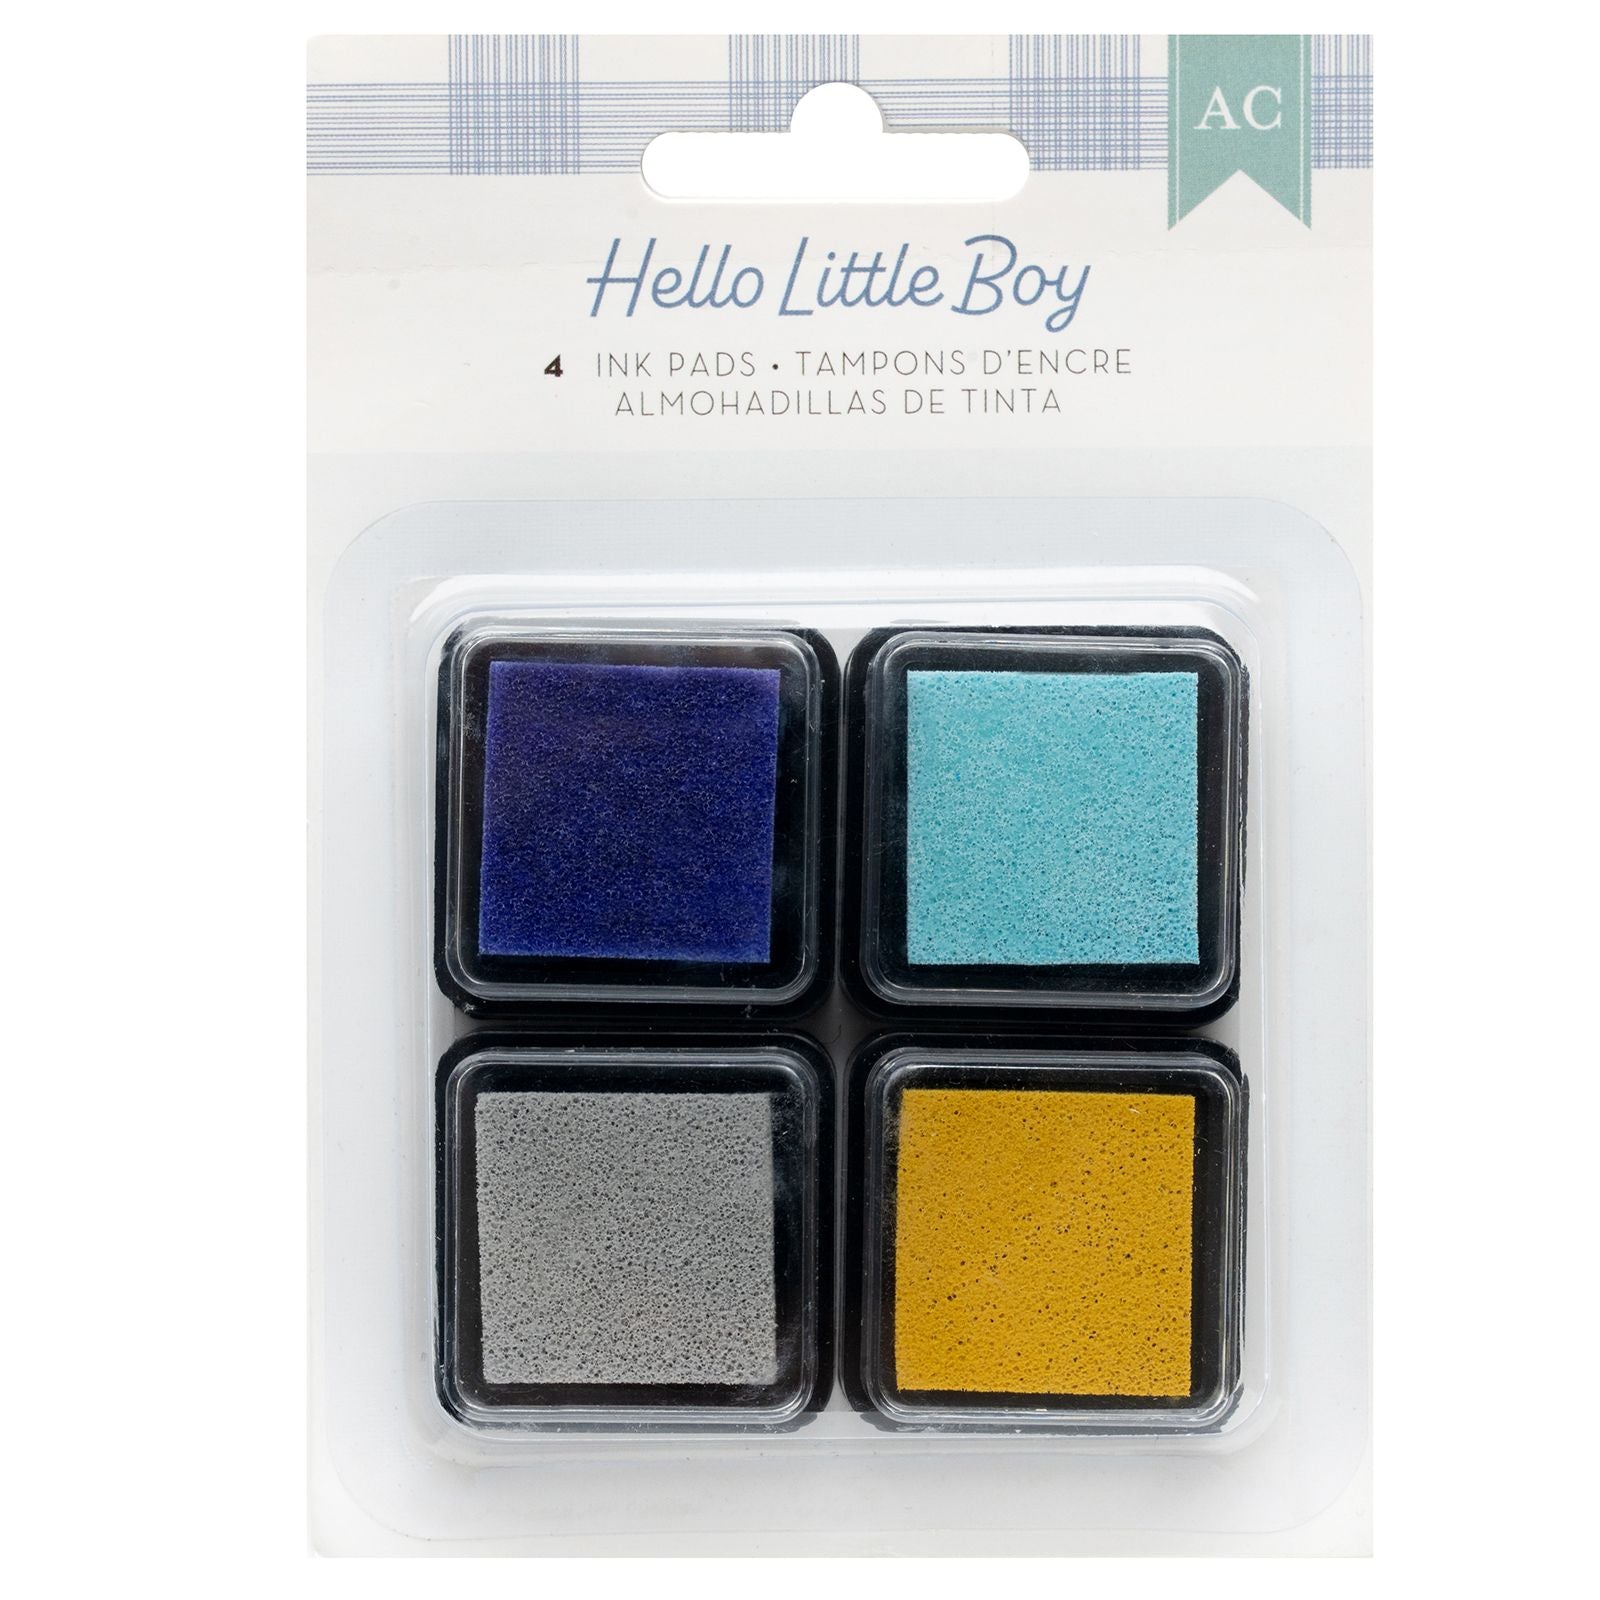 Hello Little Boy Ink Pads / Cojines de Tinta para Sellos Hola Pequeño